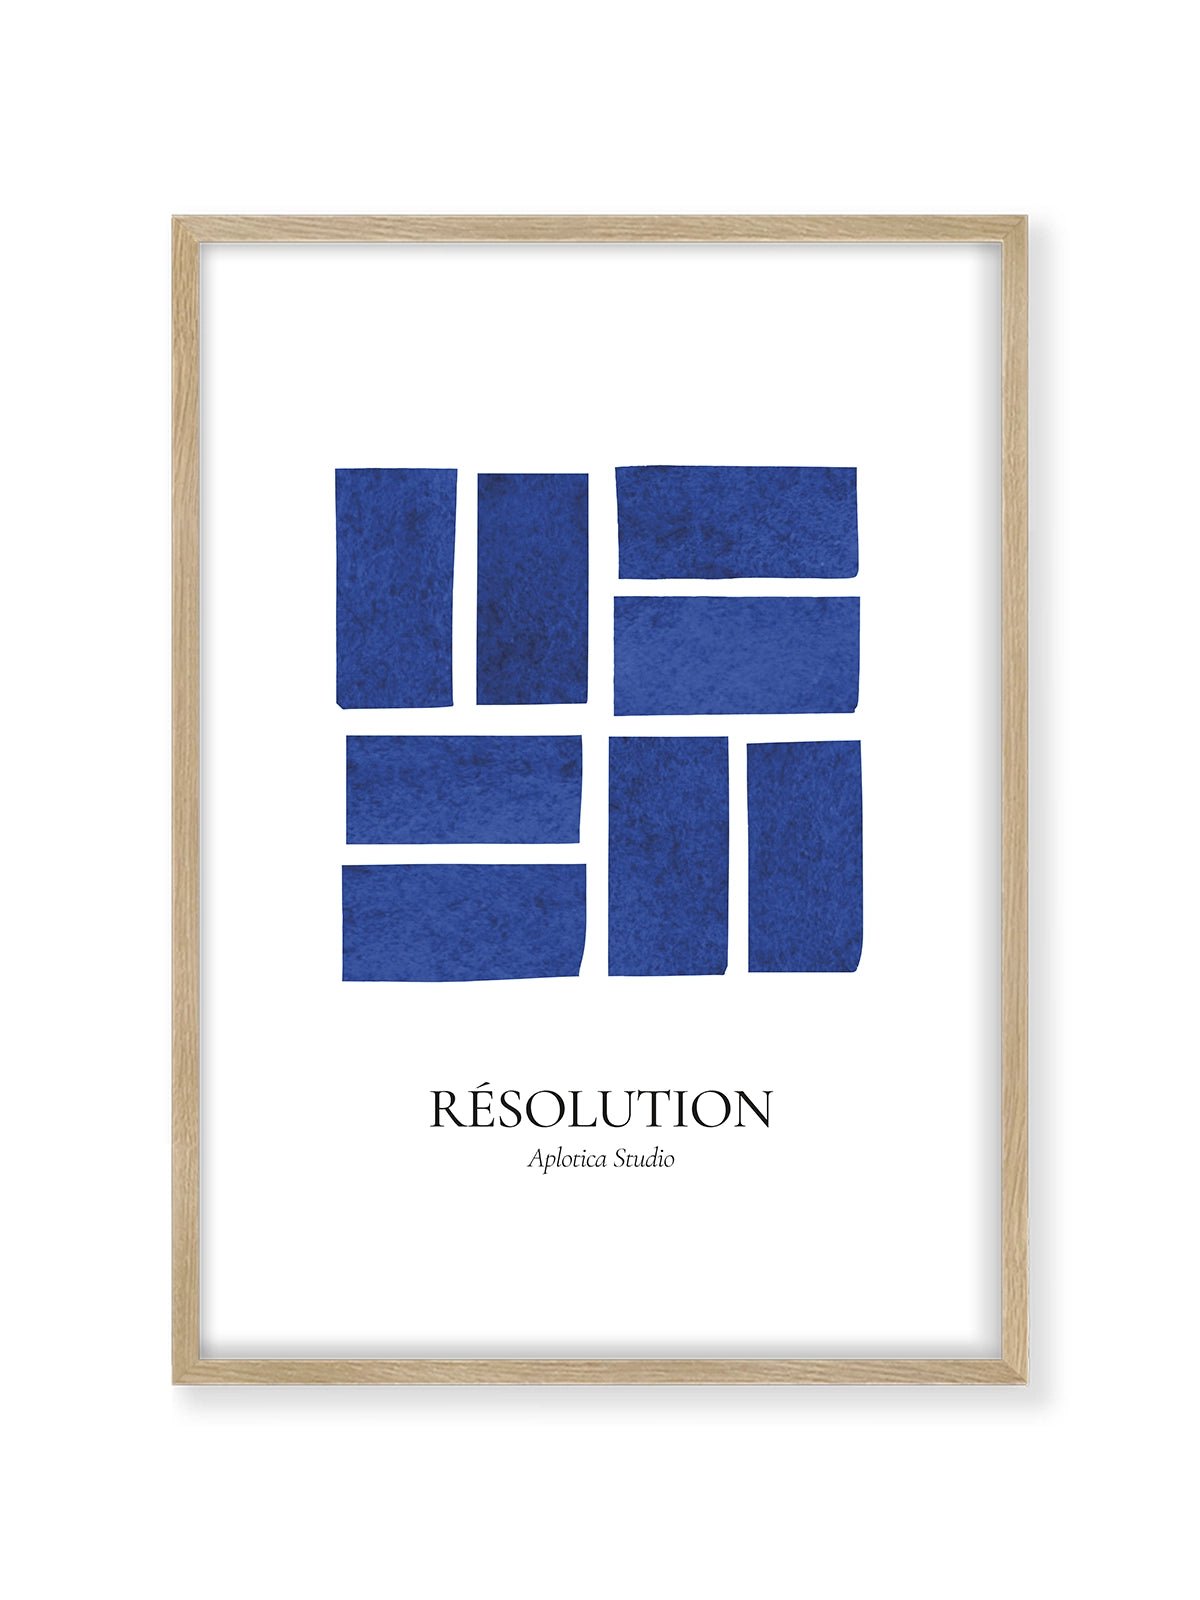 Résolution - Una Lámina de Aplotica Studio - Decora tu casa en Nomadart